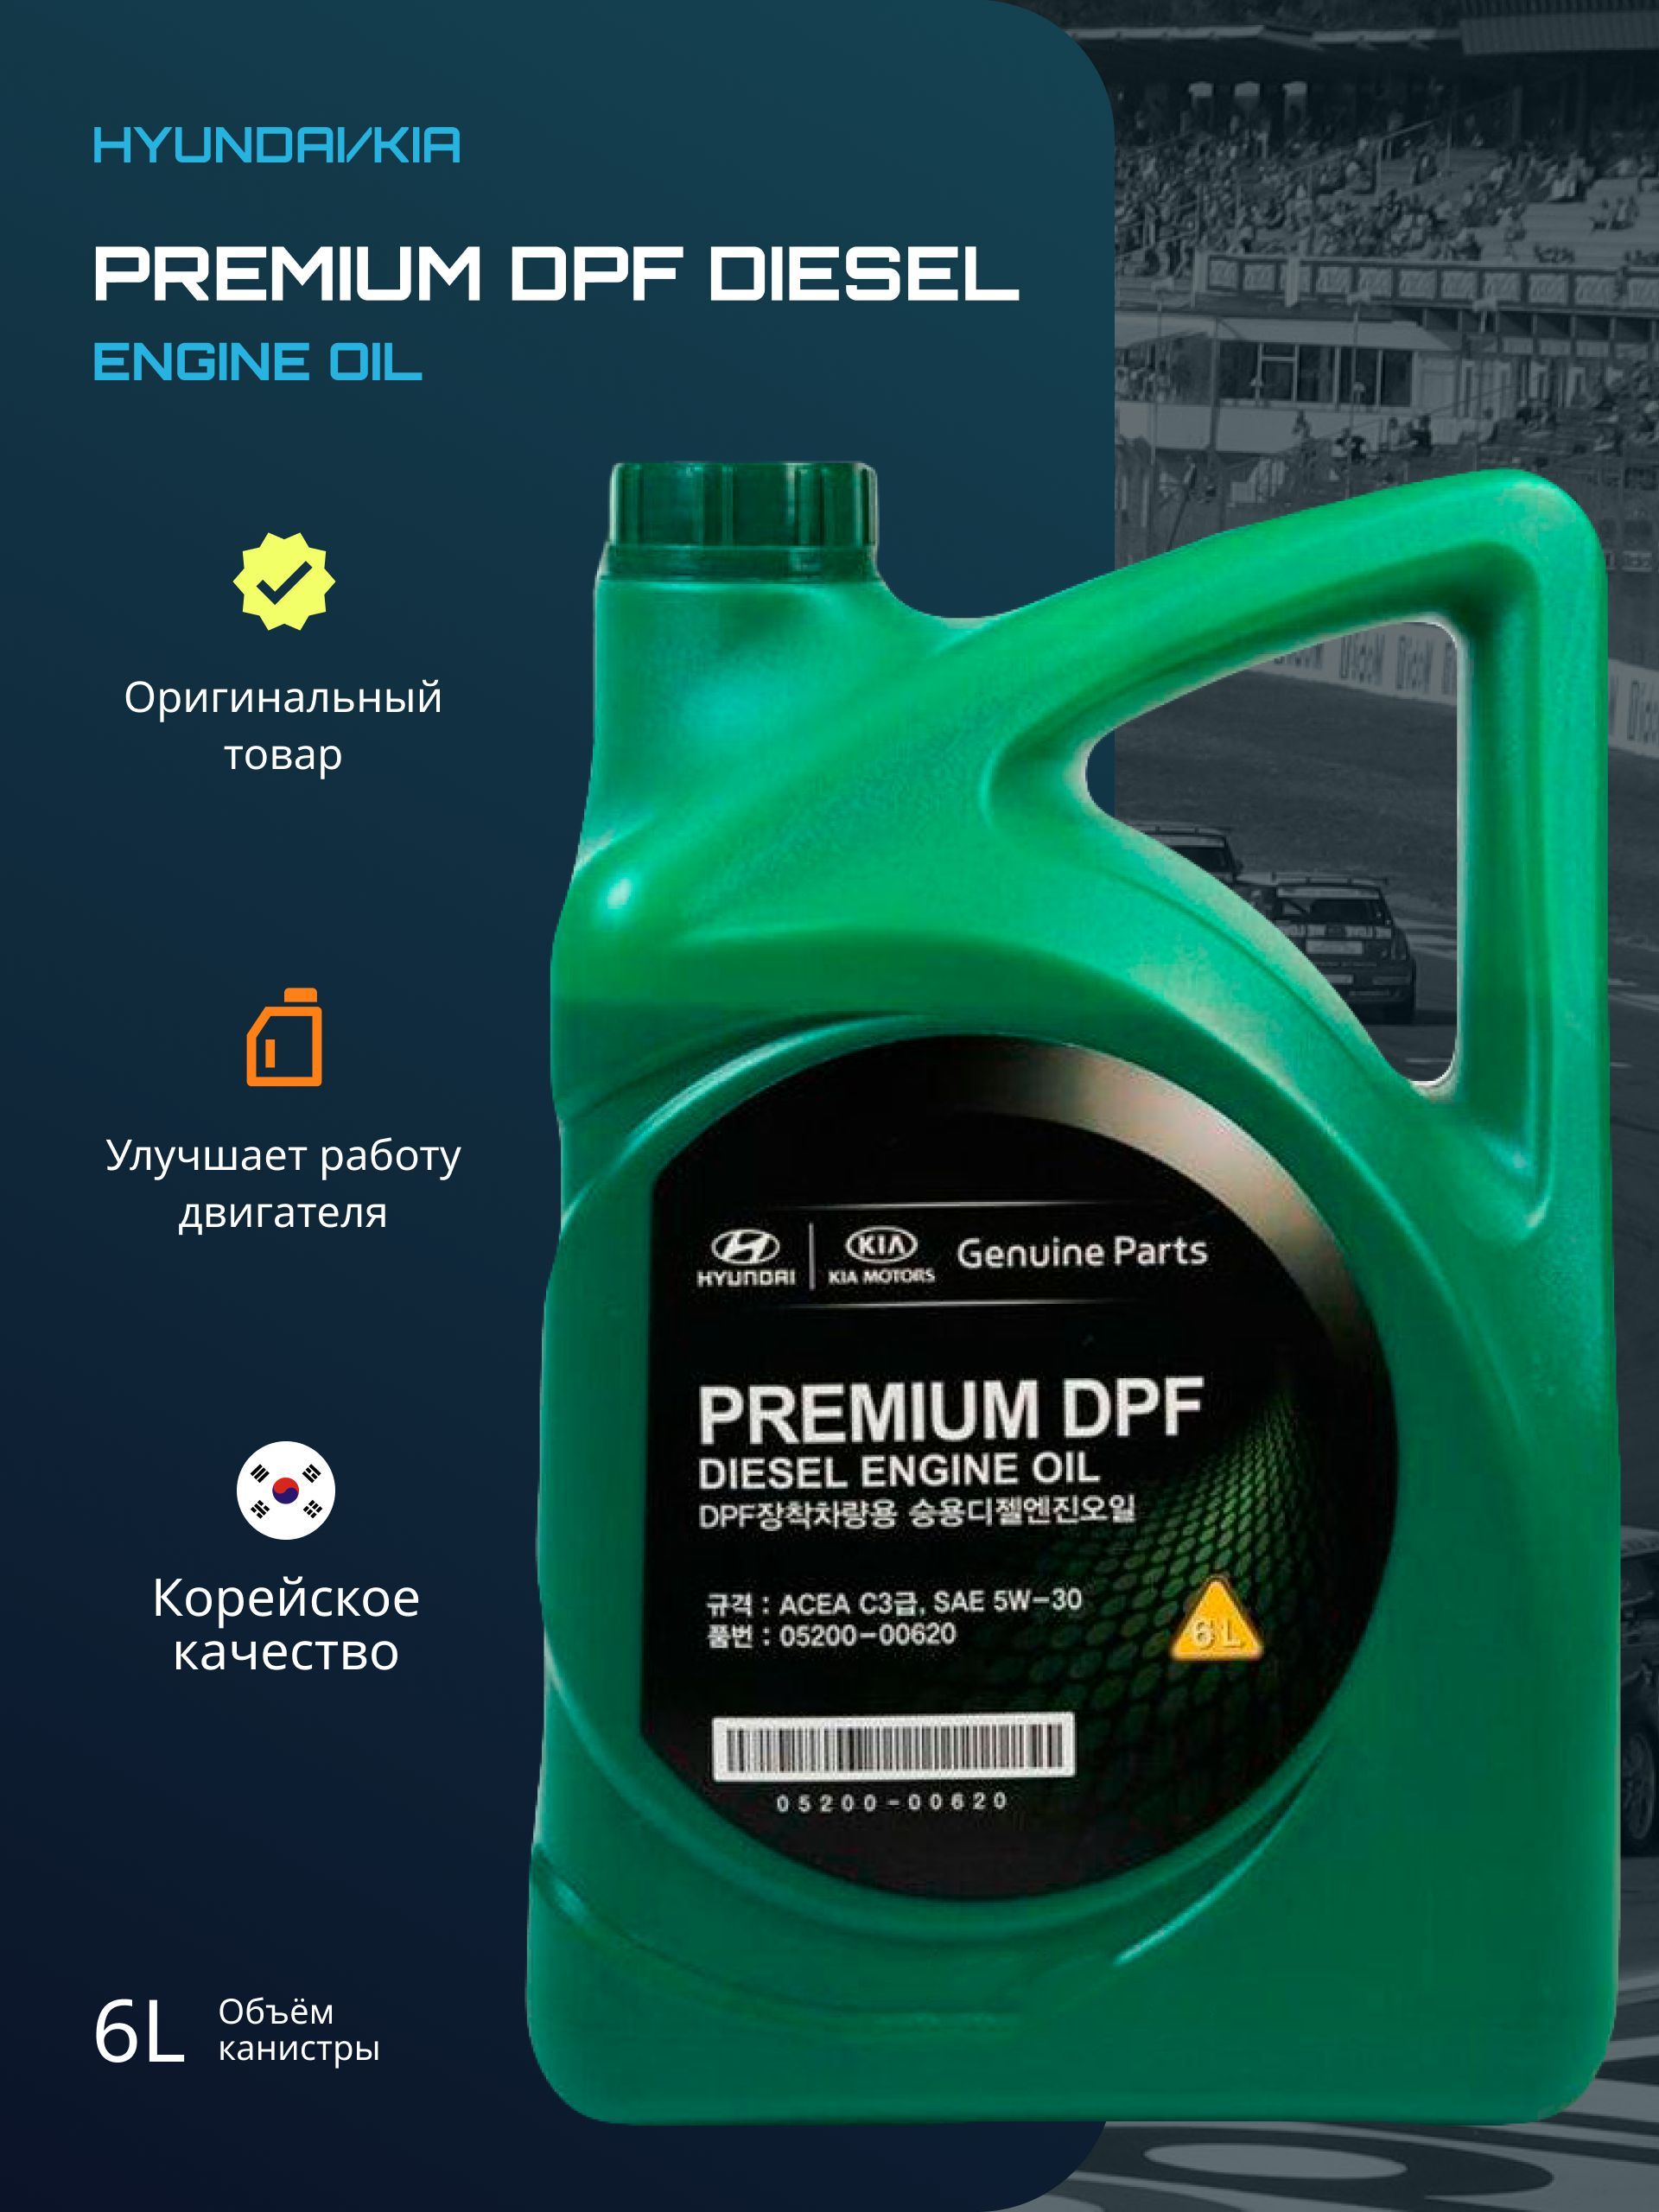 Масло kia premium dpf diesel. Hyundai Premium DPF Diesel. 0520000620 Hyundai-Kia масло мотор. 6л. Prem. DPF Diesel 5w-30. Как расшифровать дату производства масла Kia Premium DPF Diesel.